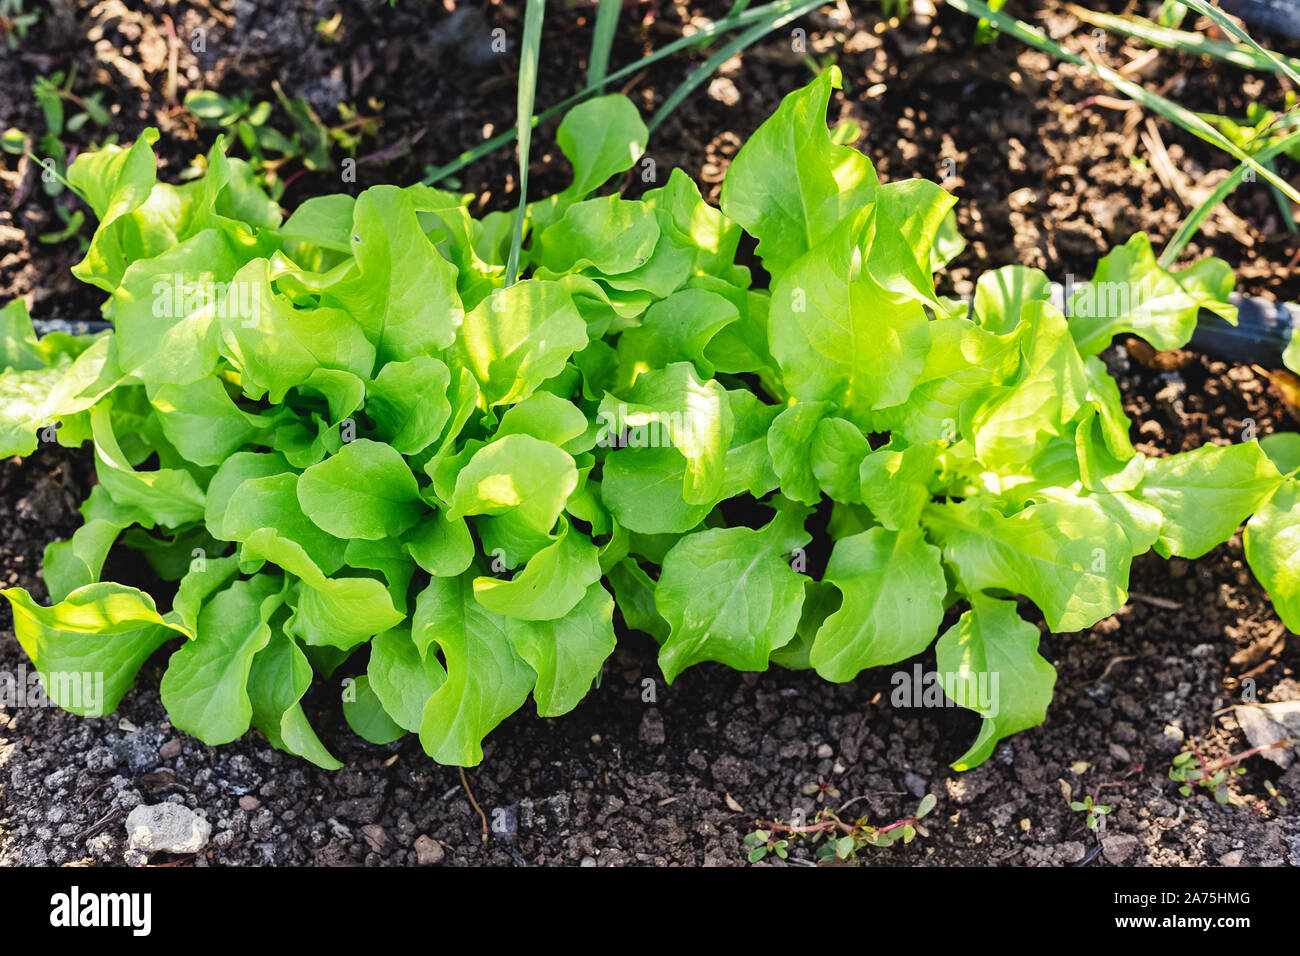 Lettuce leaves Planting in farmer's garden for food. Healthy lettuce growing in the soil. Fresh green leaf lettuce plants grows in the open ground. Ba Stock Photo